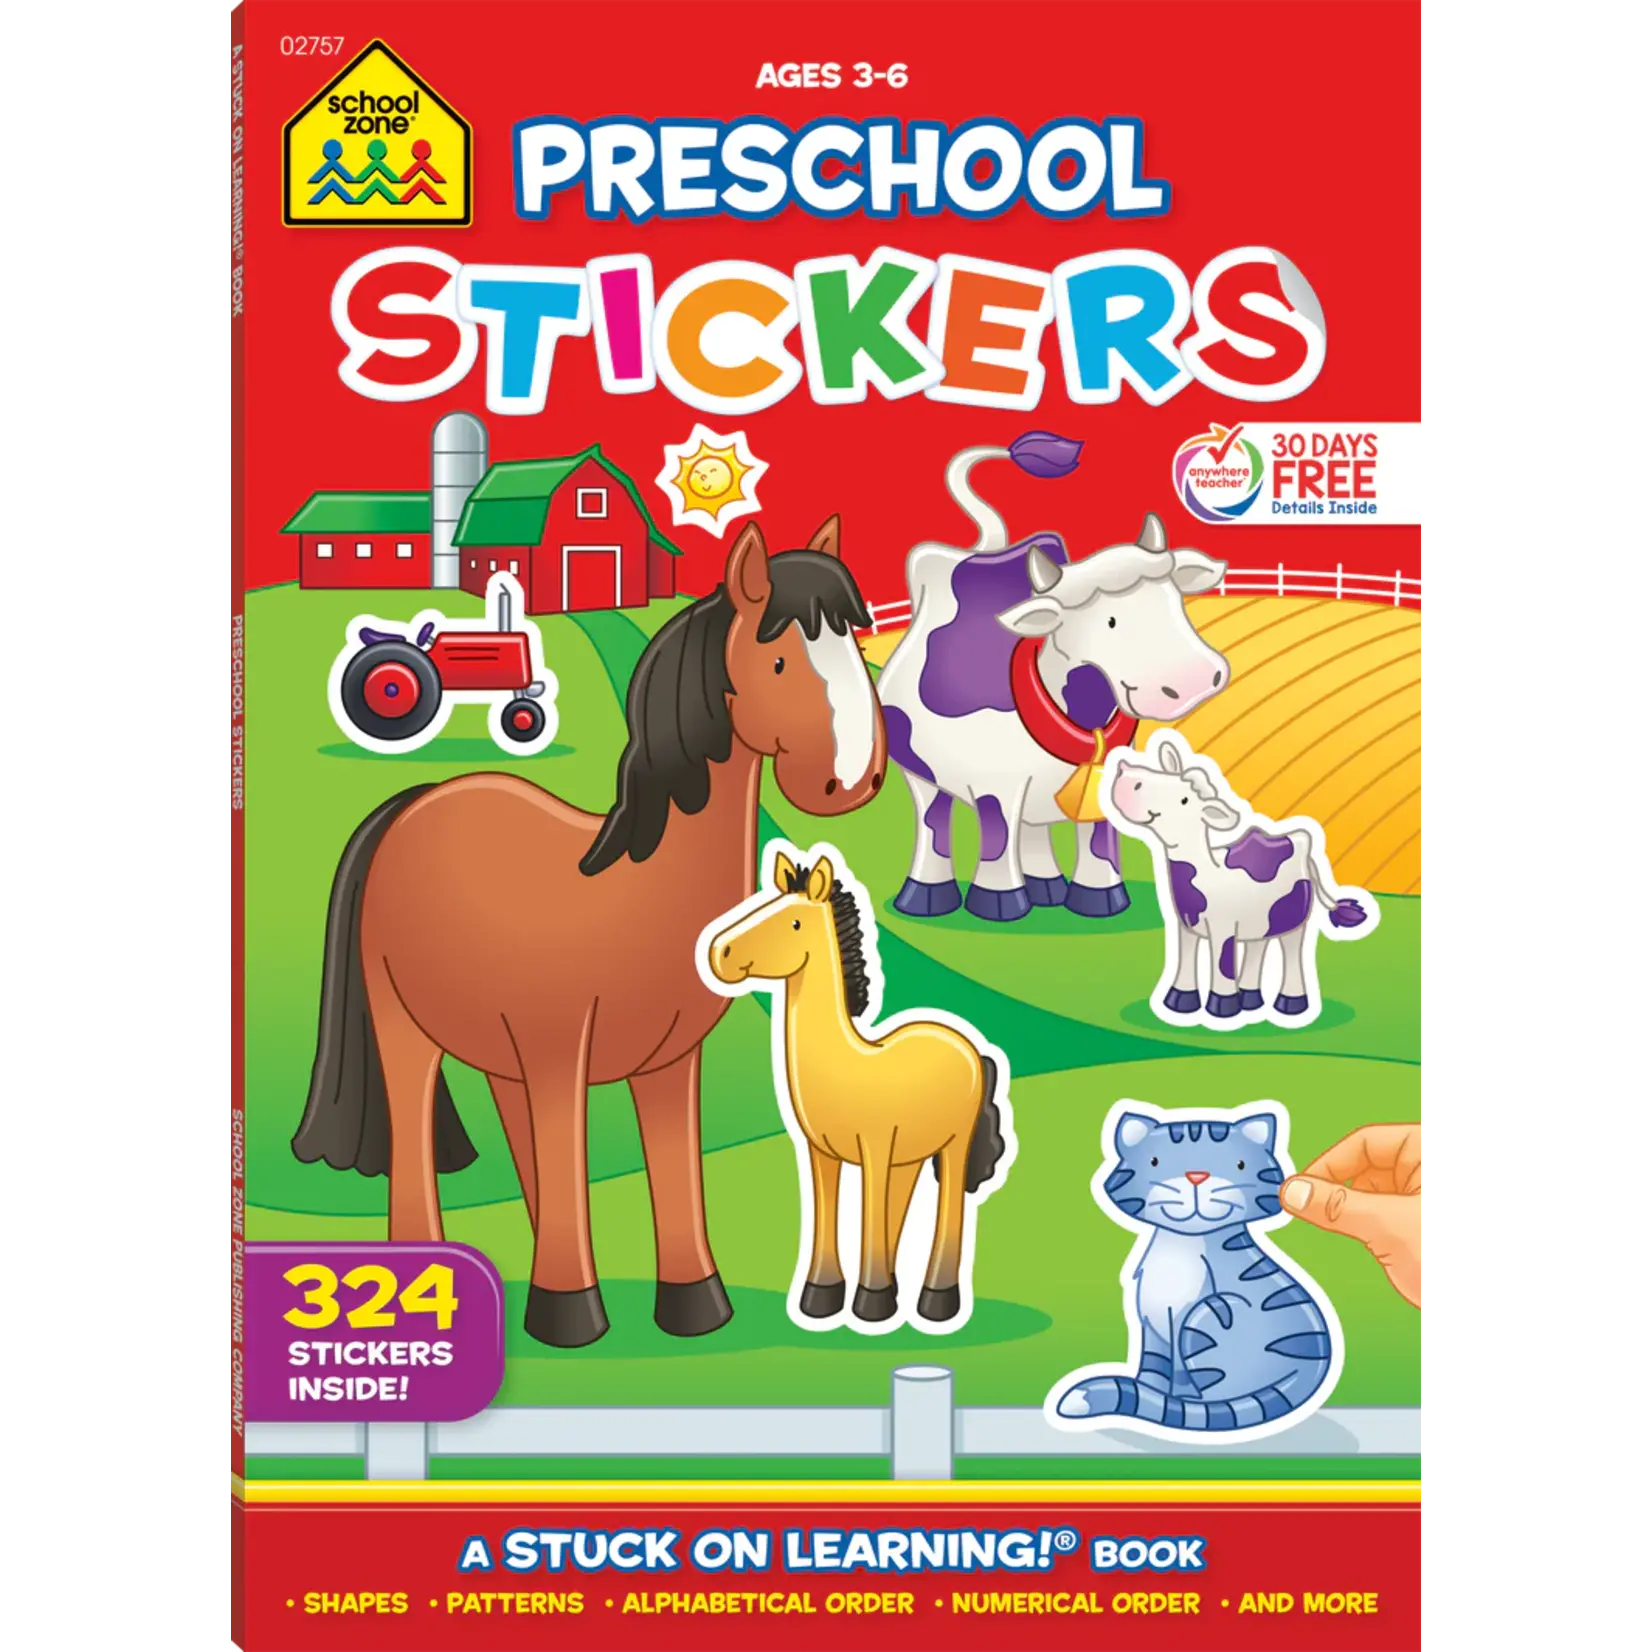 School Zone Publishing Company Preschool Sticker Books